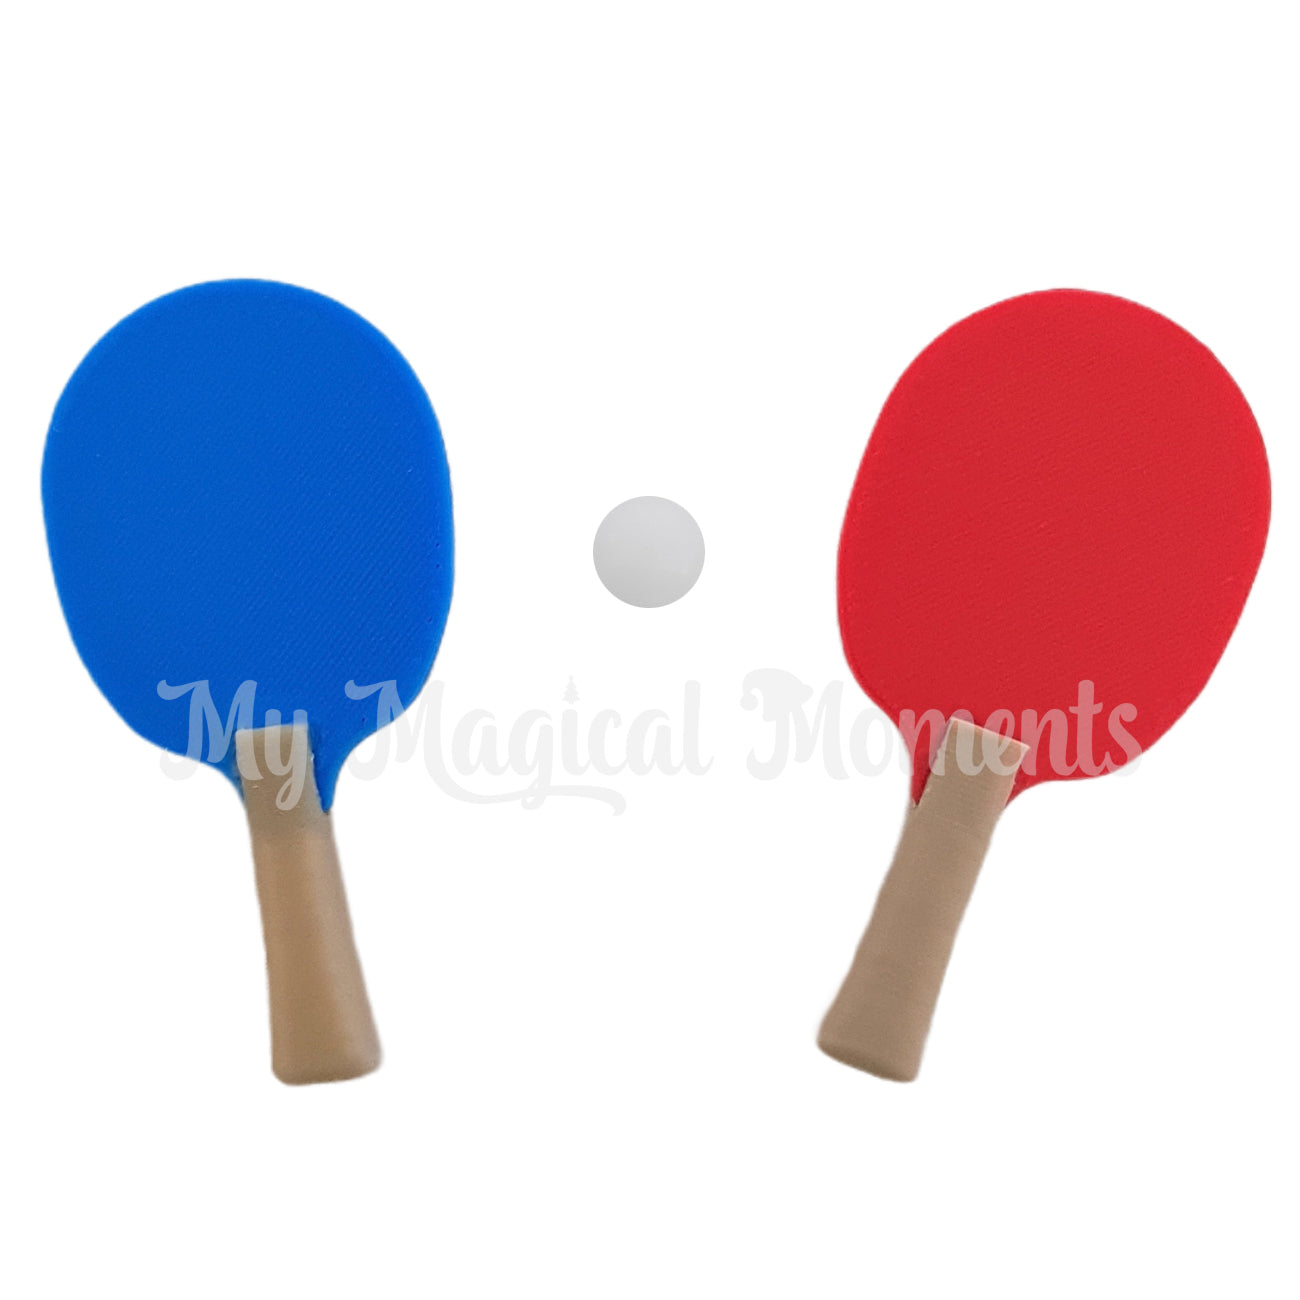 miniature Ping pong paddles and ball